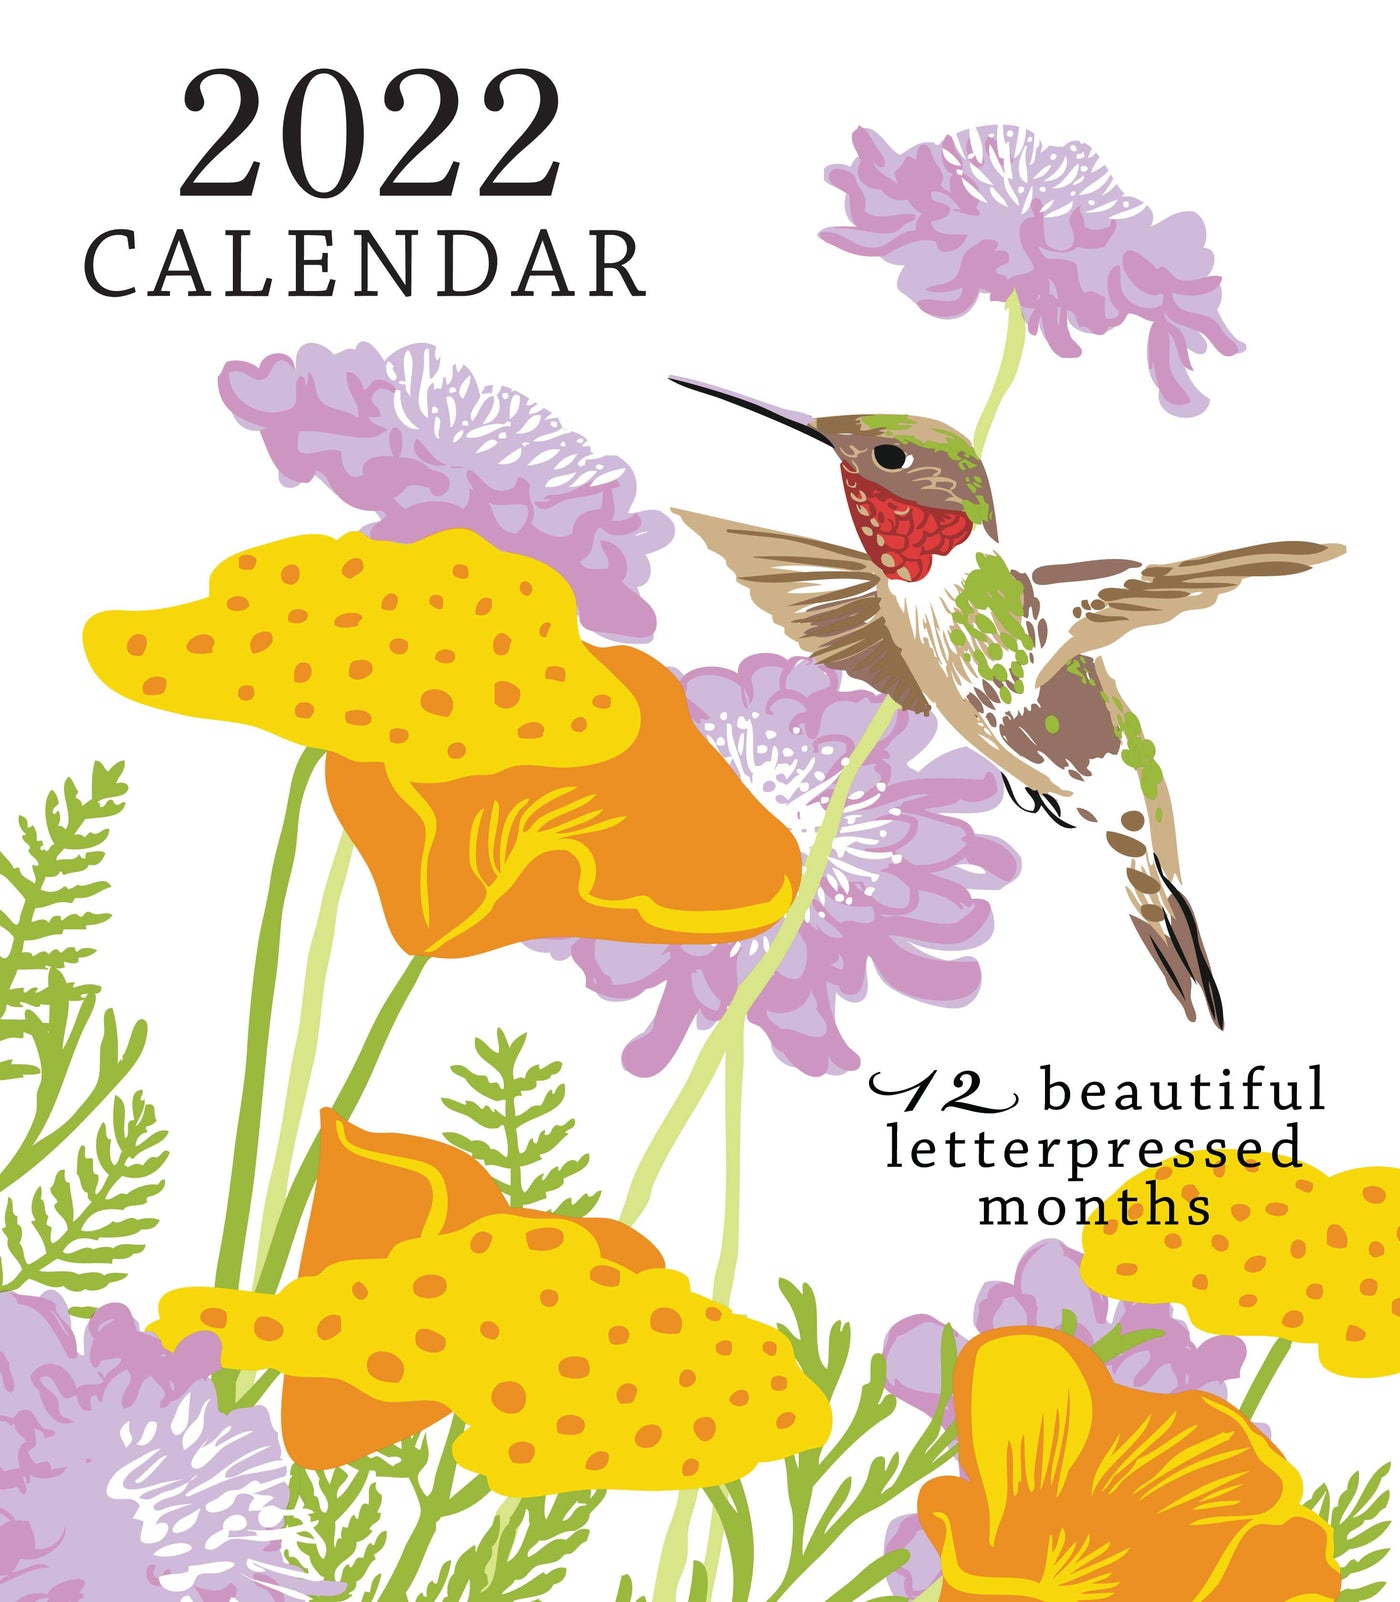 2022 Letterpress Desktop Calendar